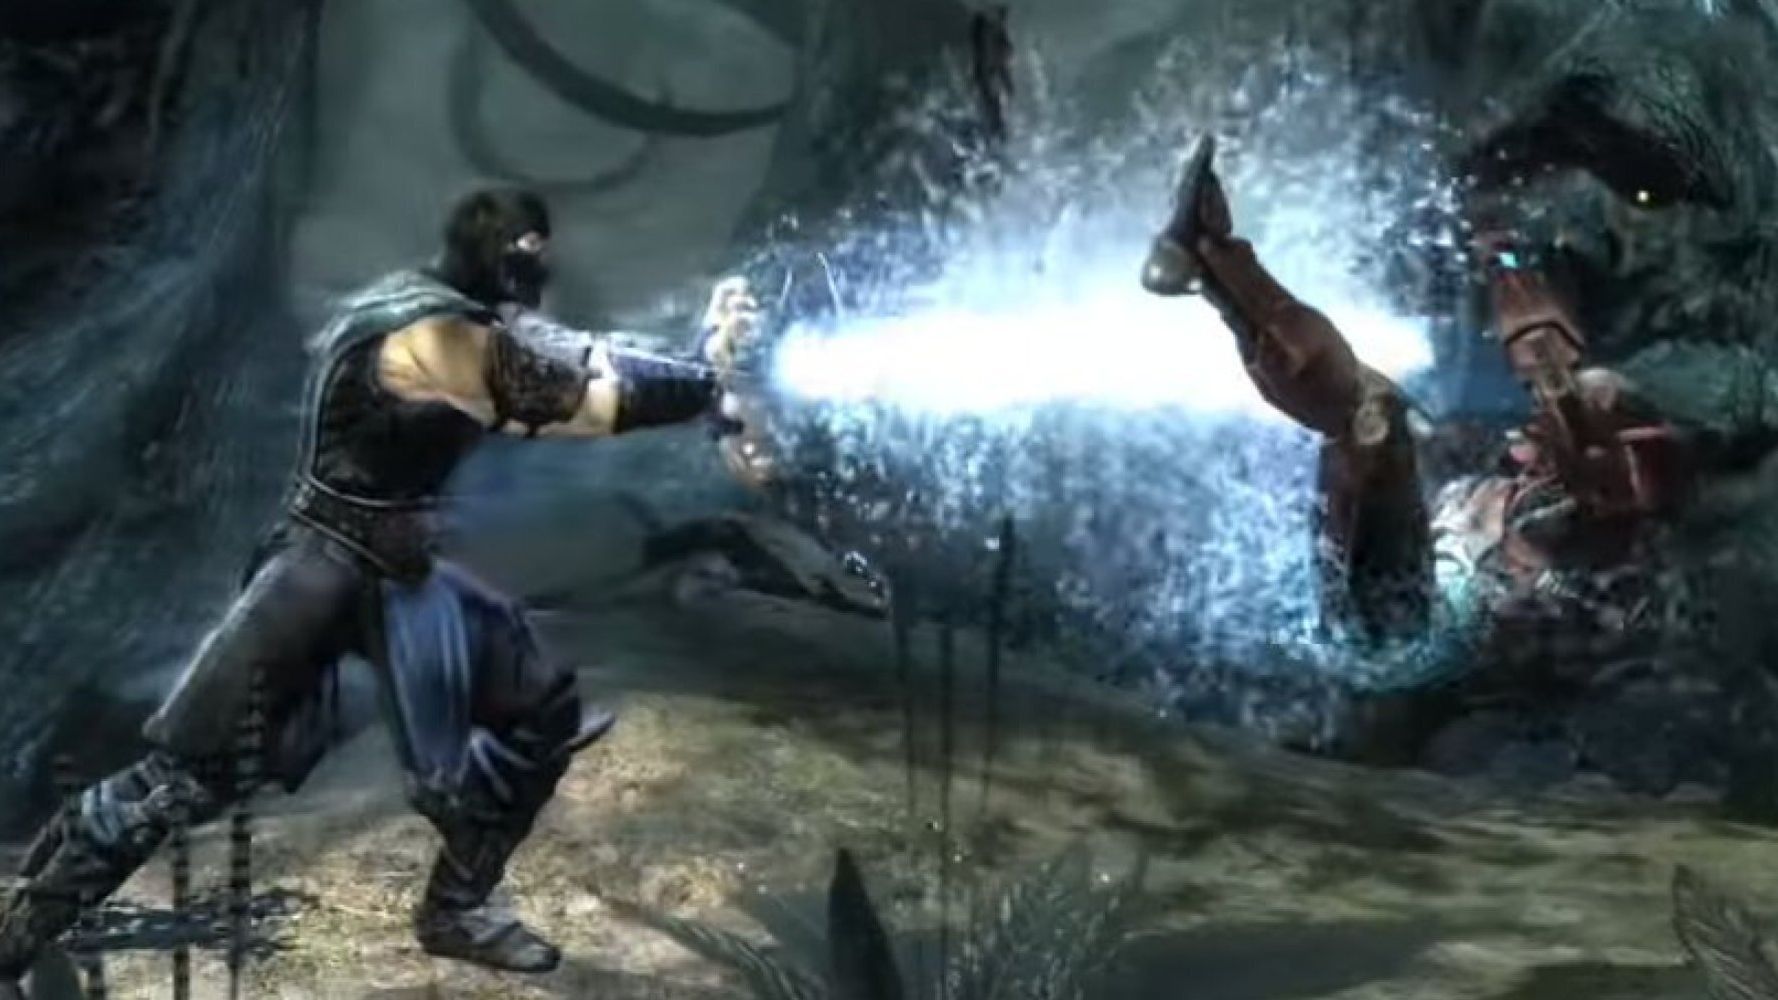 Mortal Kombat (PC, 2011) – Pixel Hunted